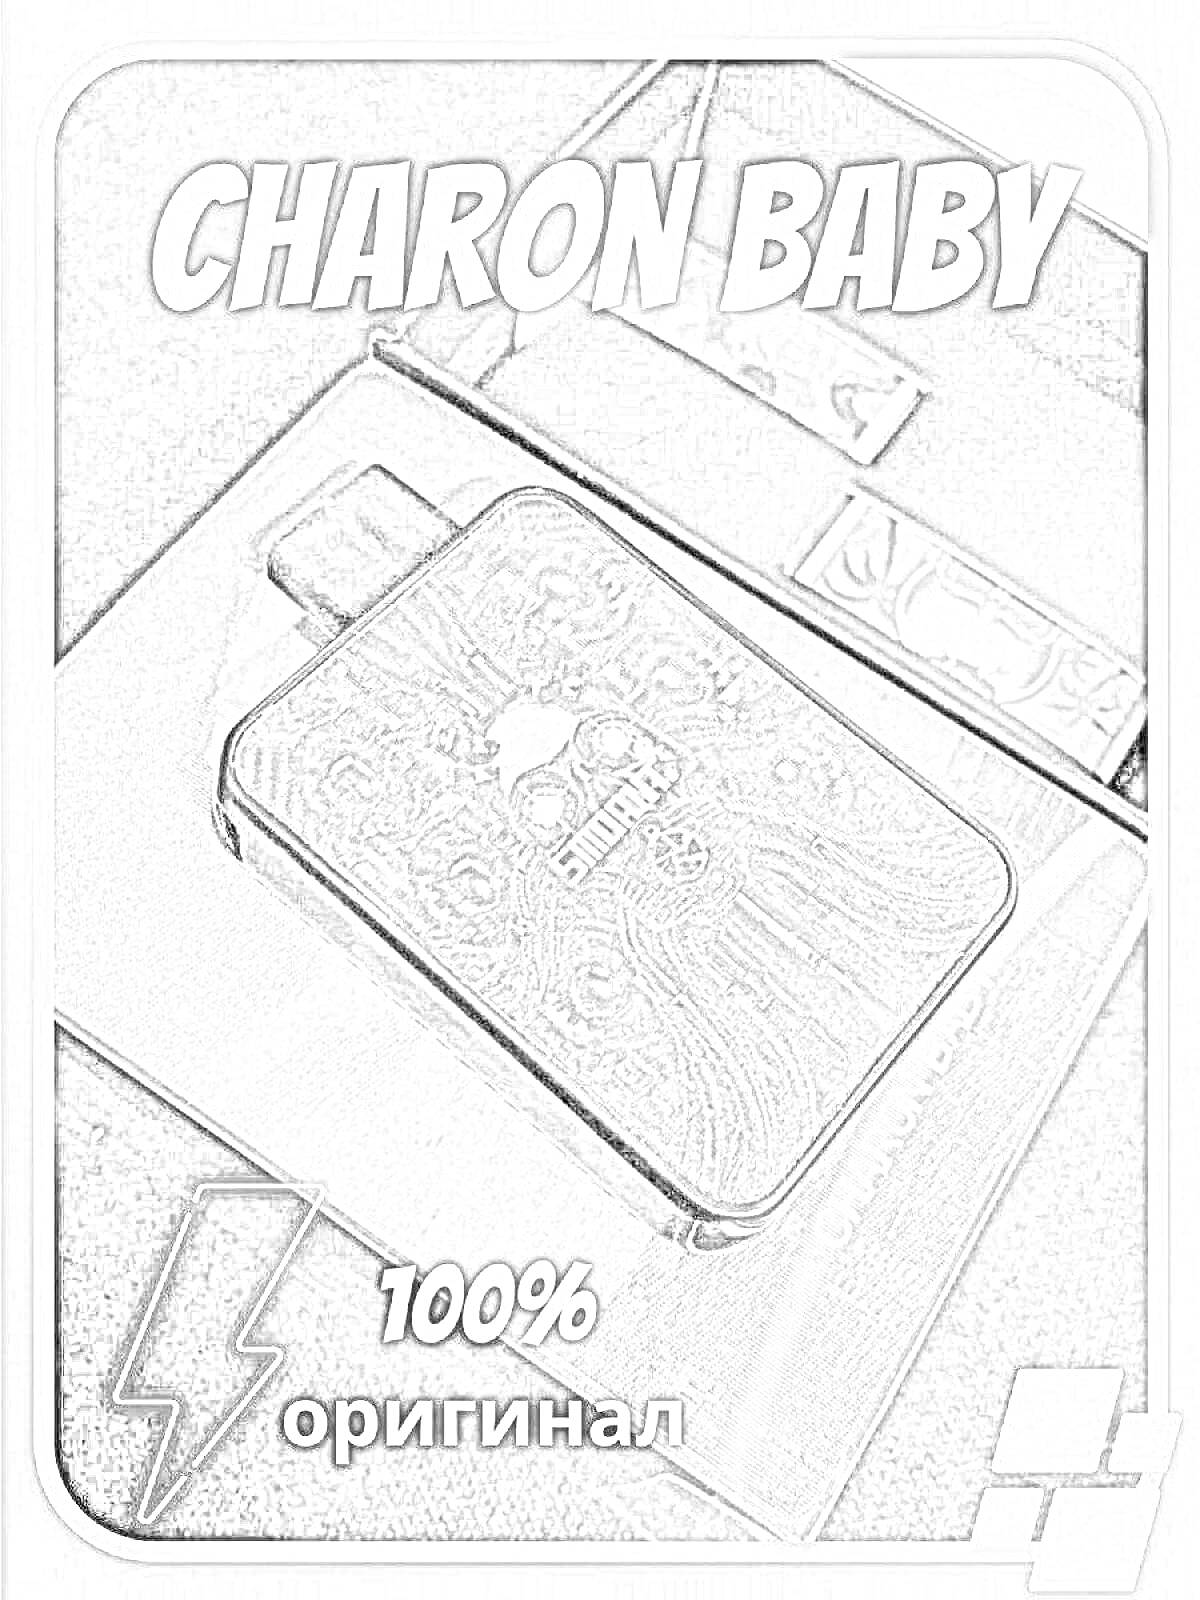 На раскраске изображено: Вейп, Упаковка, Charon Baby, Оригинал, Электронная сигарета